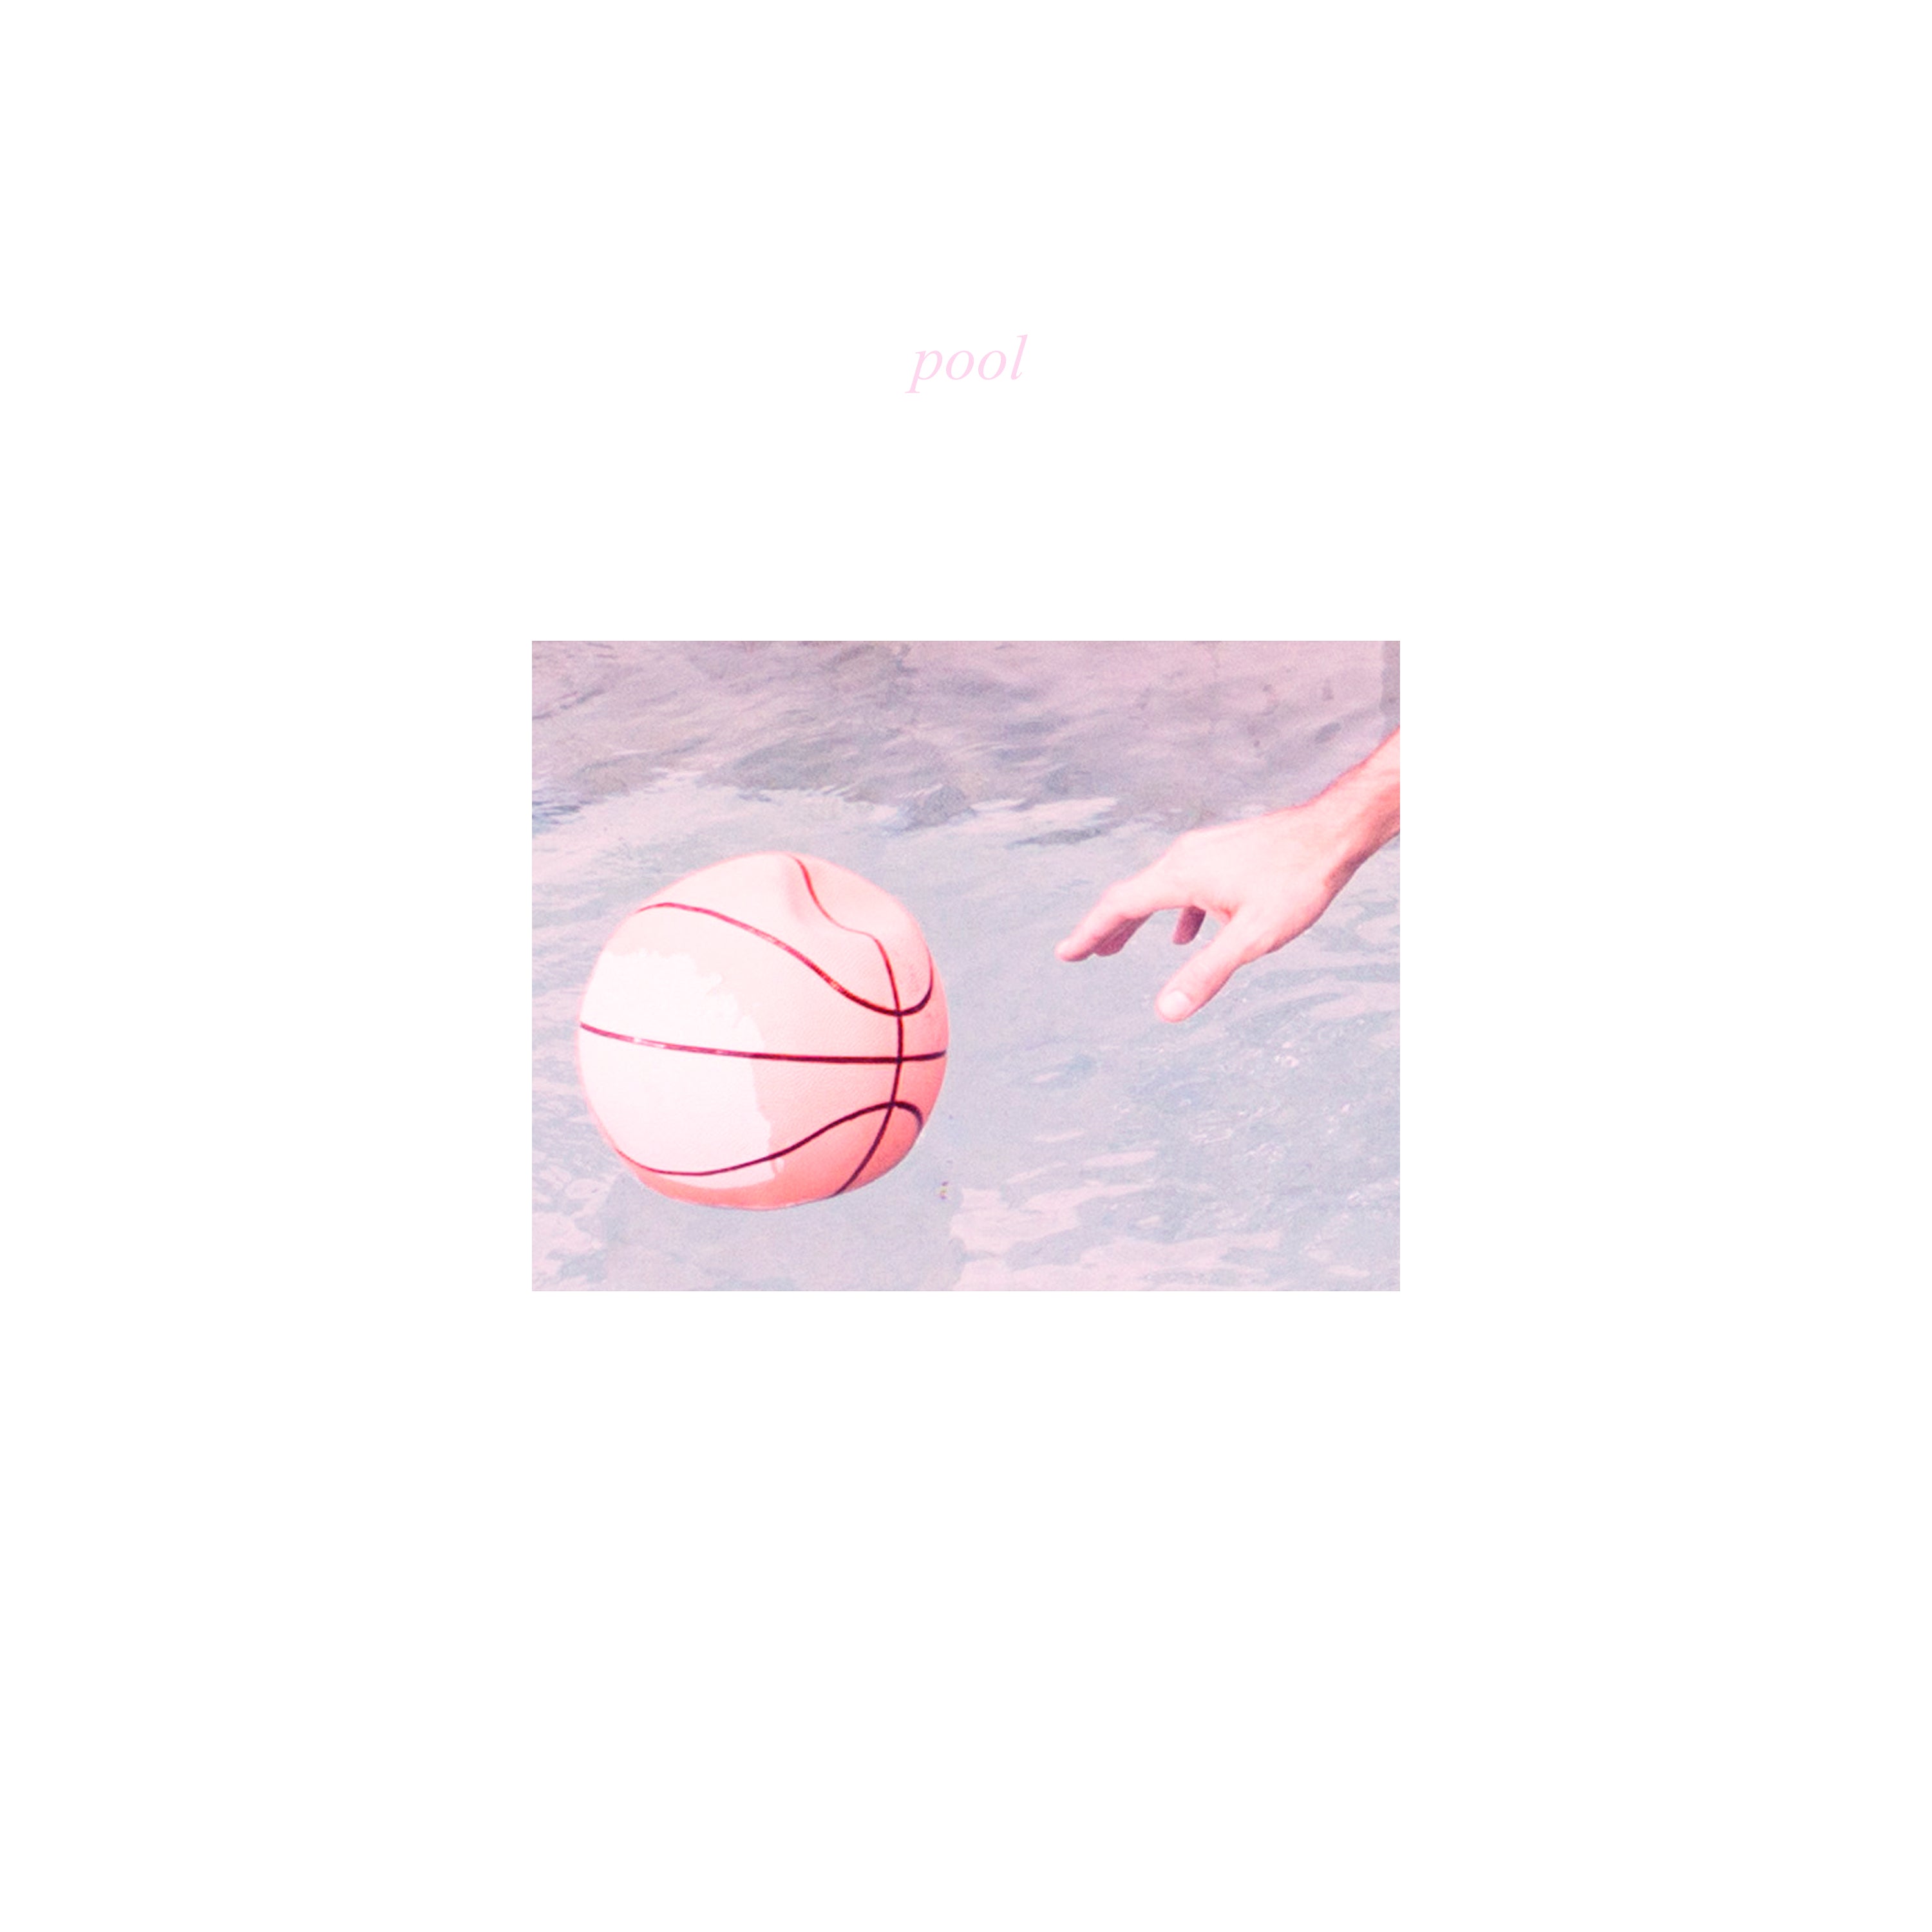 Porches | Pool | CD